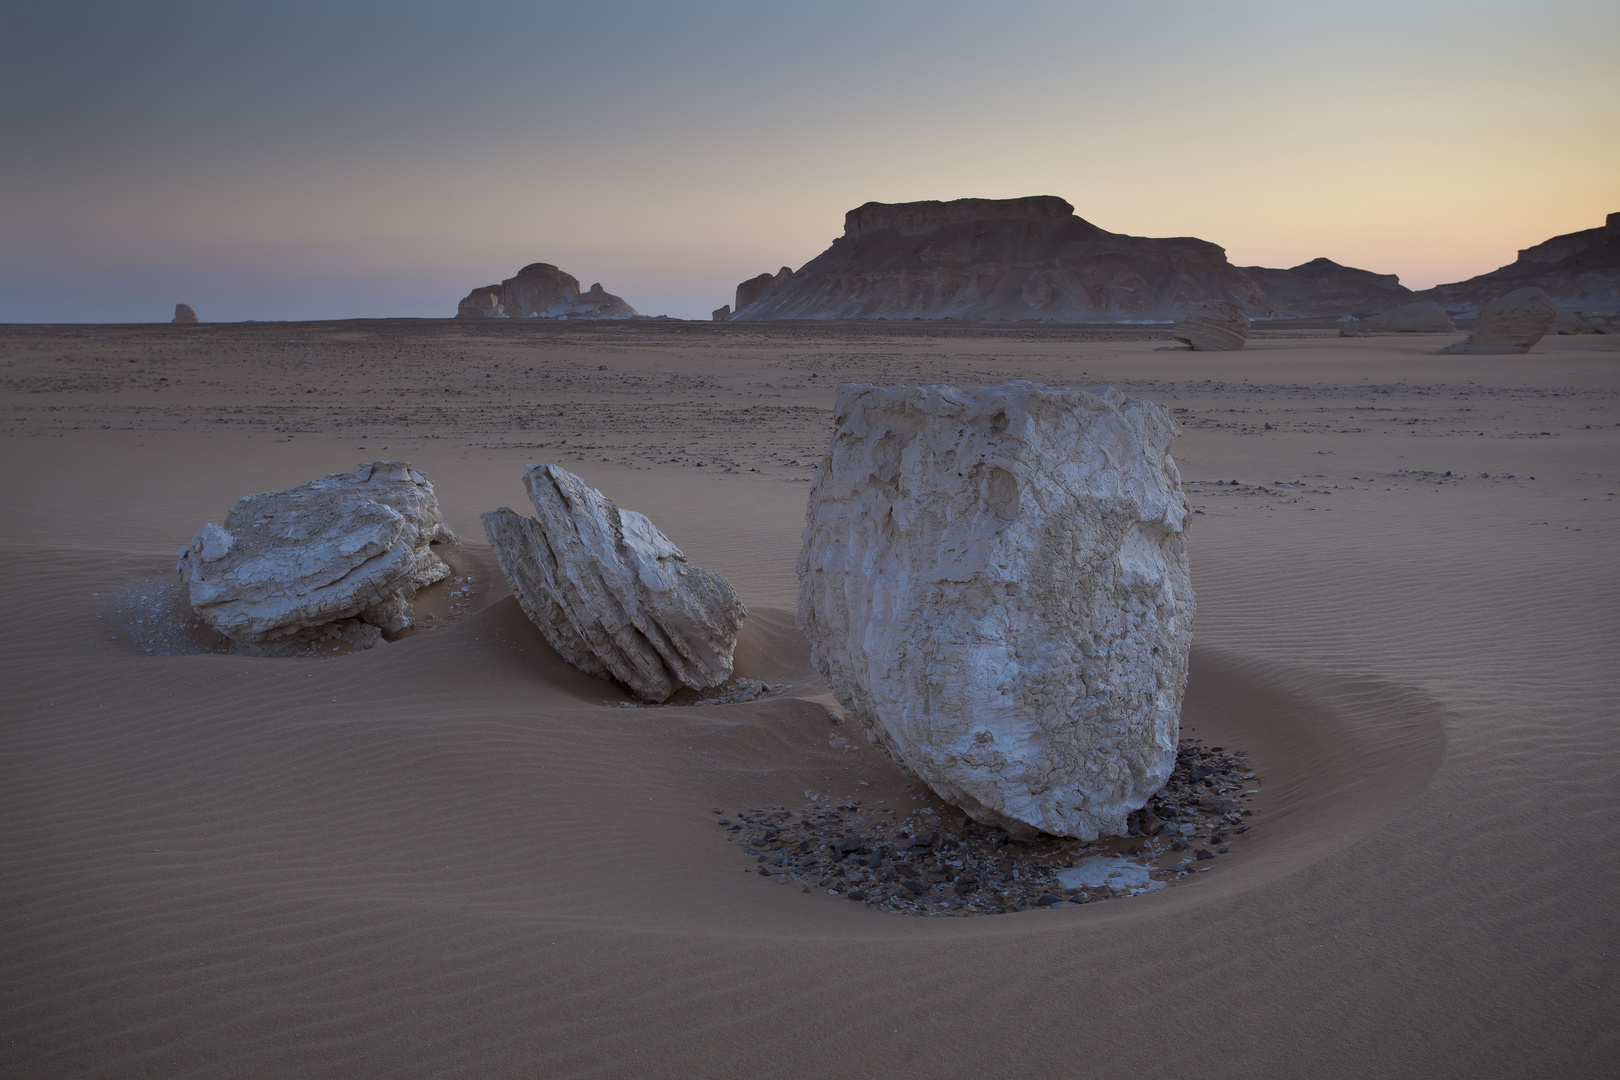 Skulpturen in der Wüste II